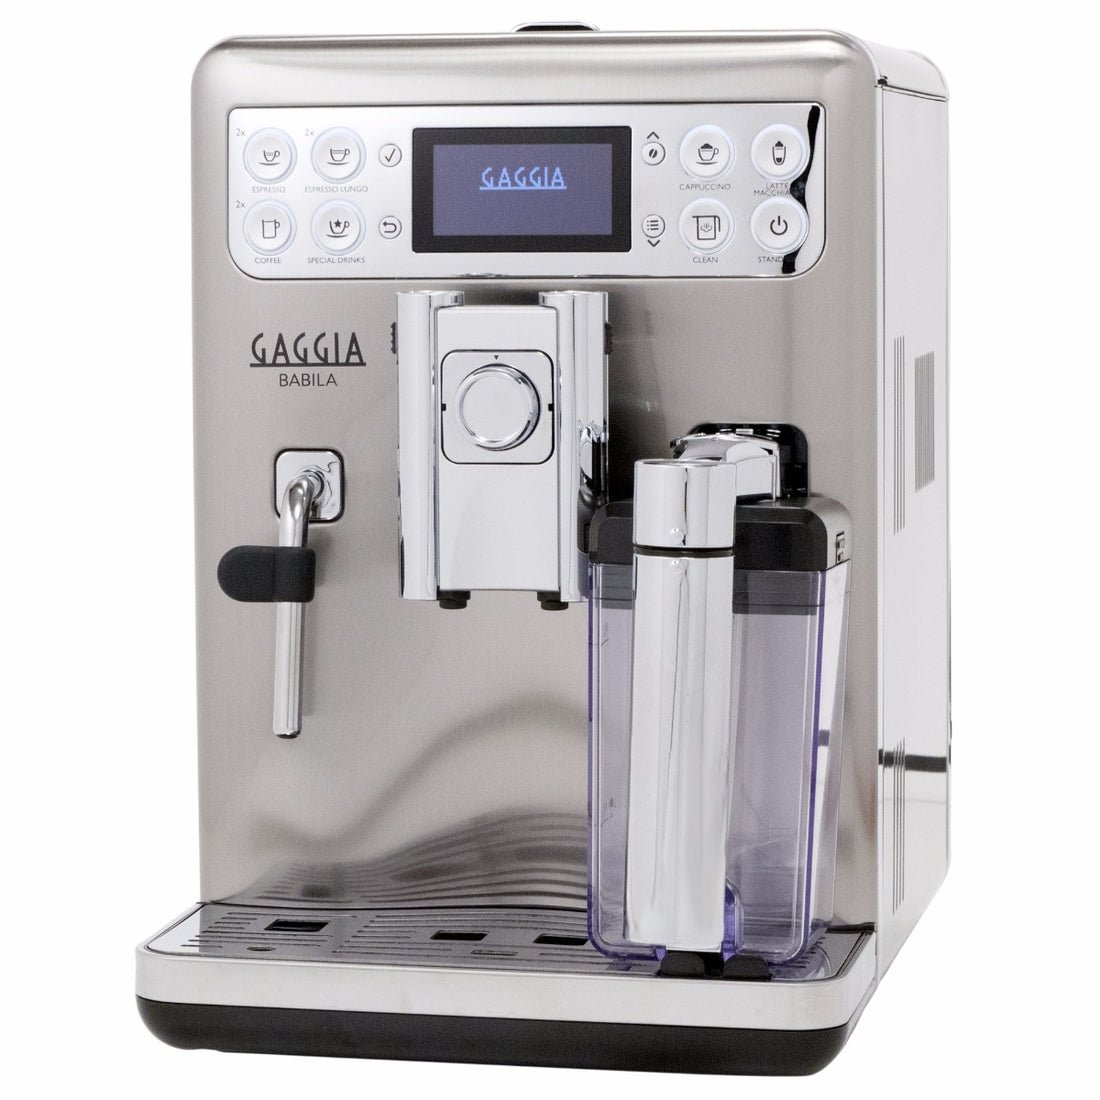 Refurbished Gaggia Babila One-Touch Coffee and Espresso Machine